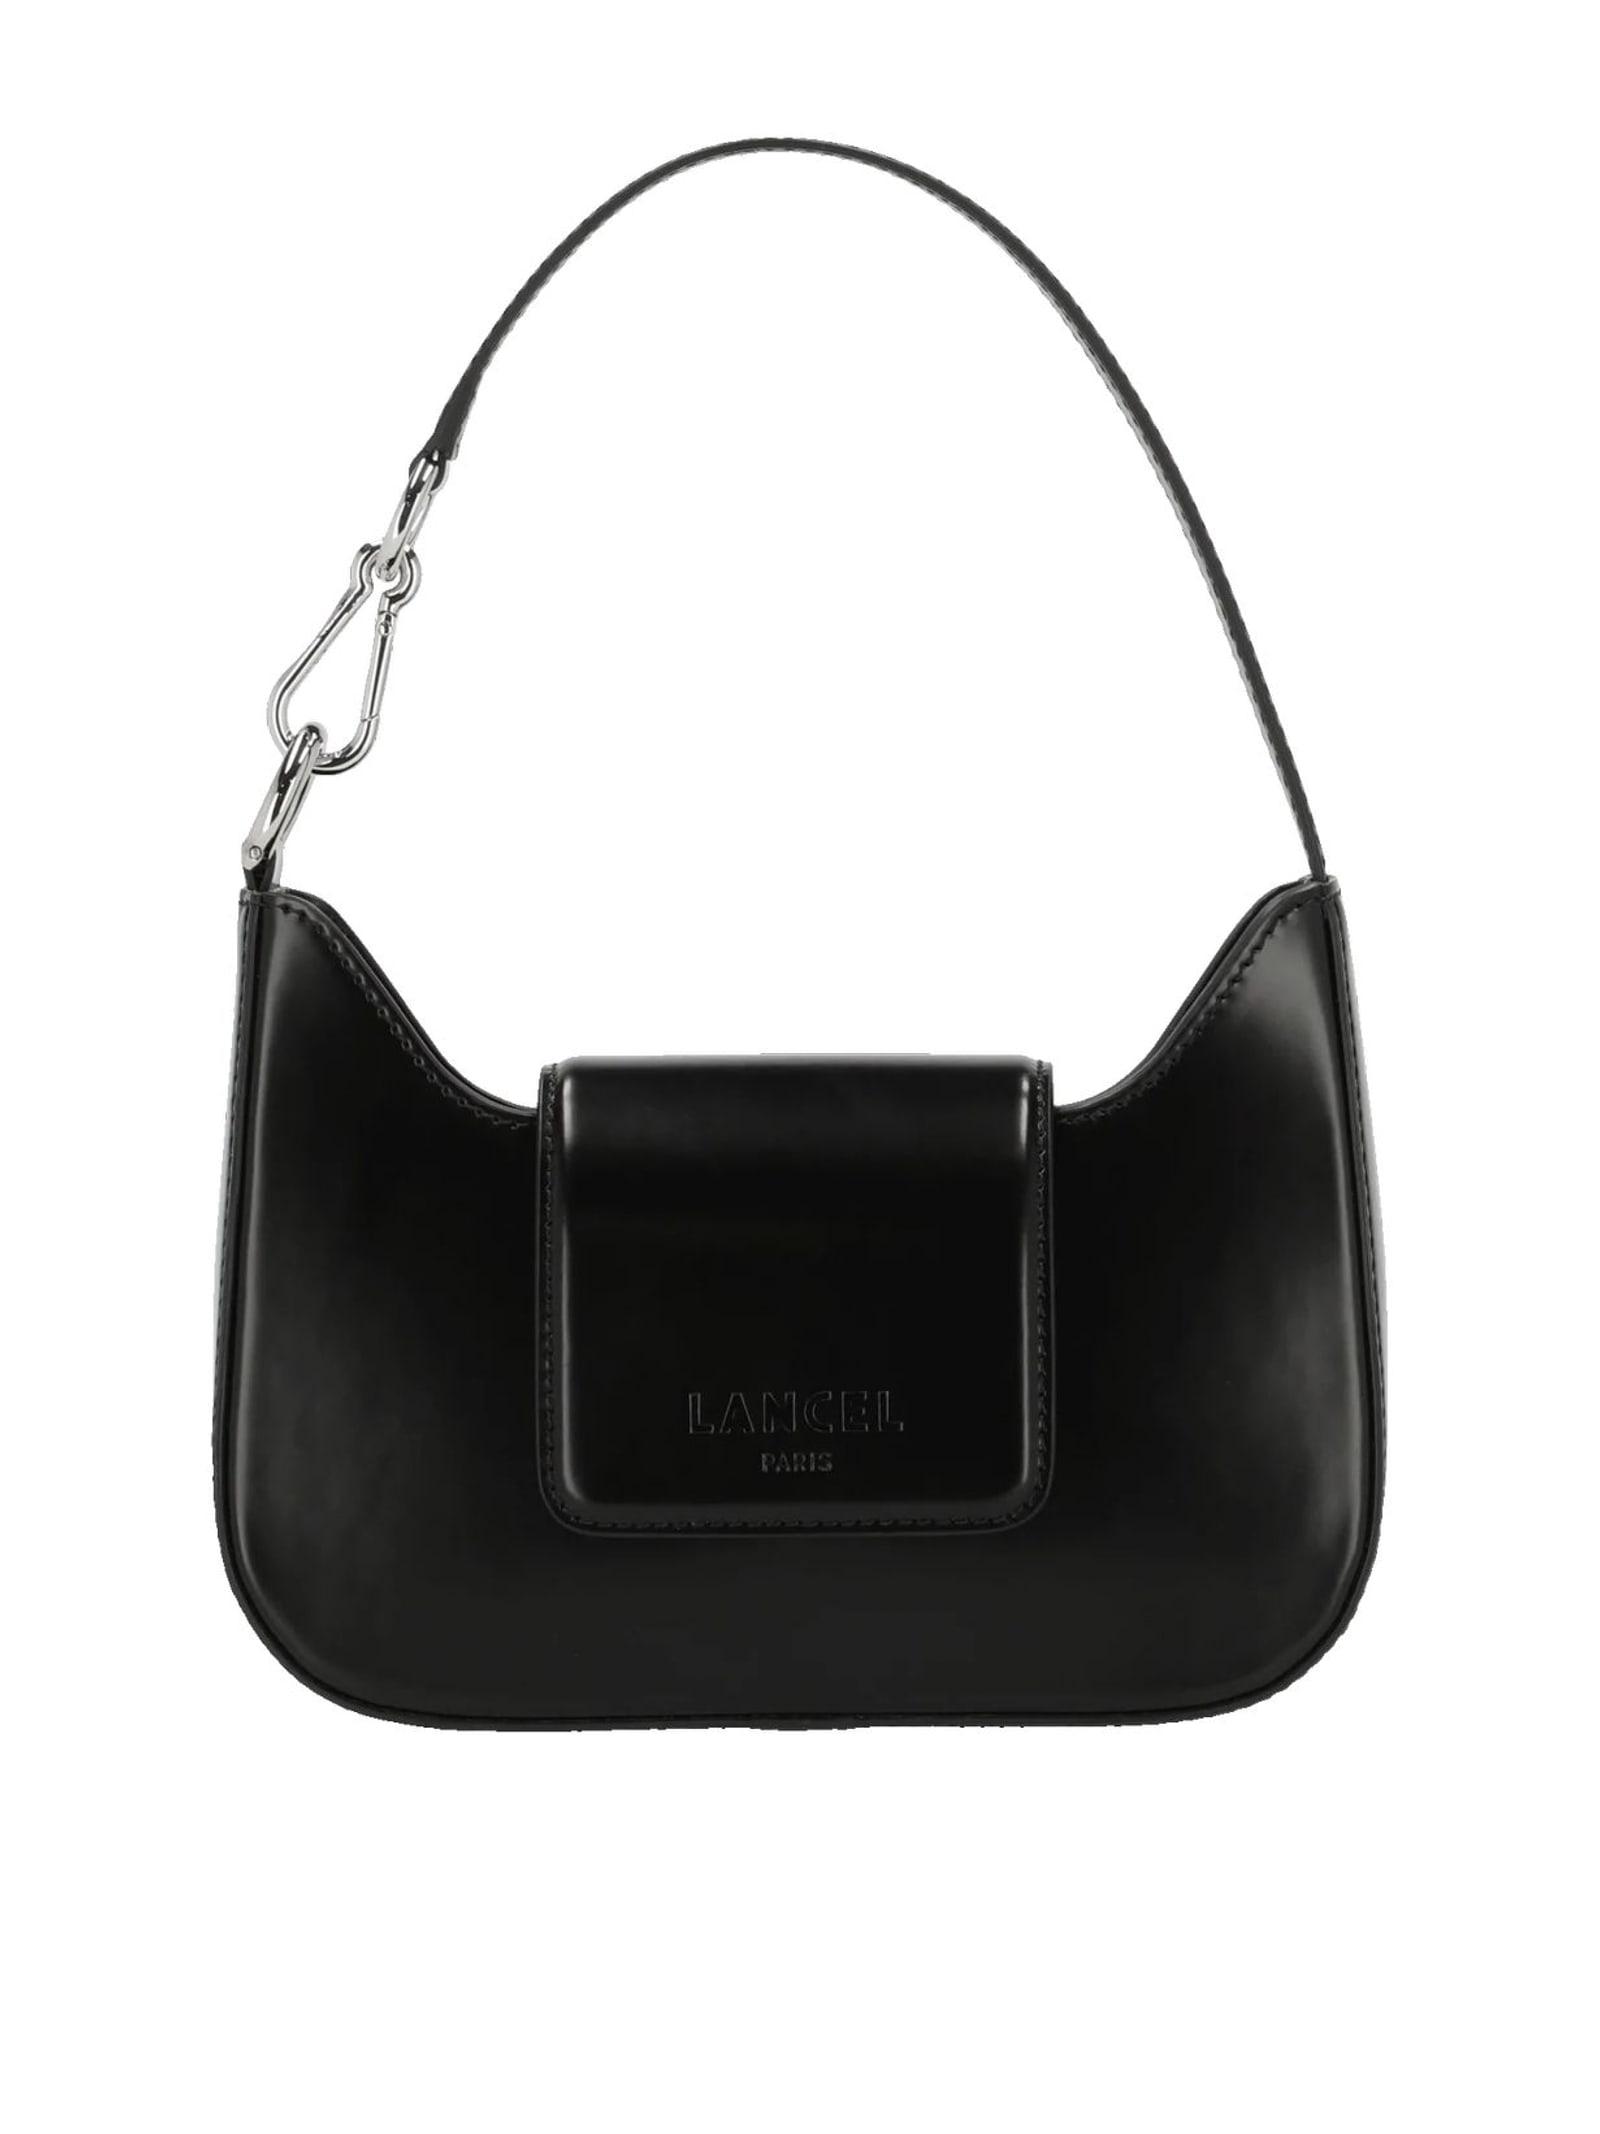 Lancel Black Leather Baguette Bag | Lyst